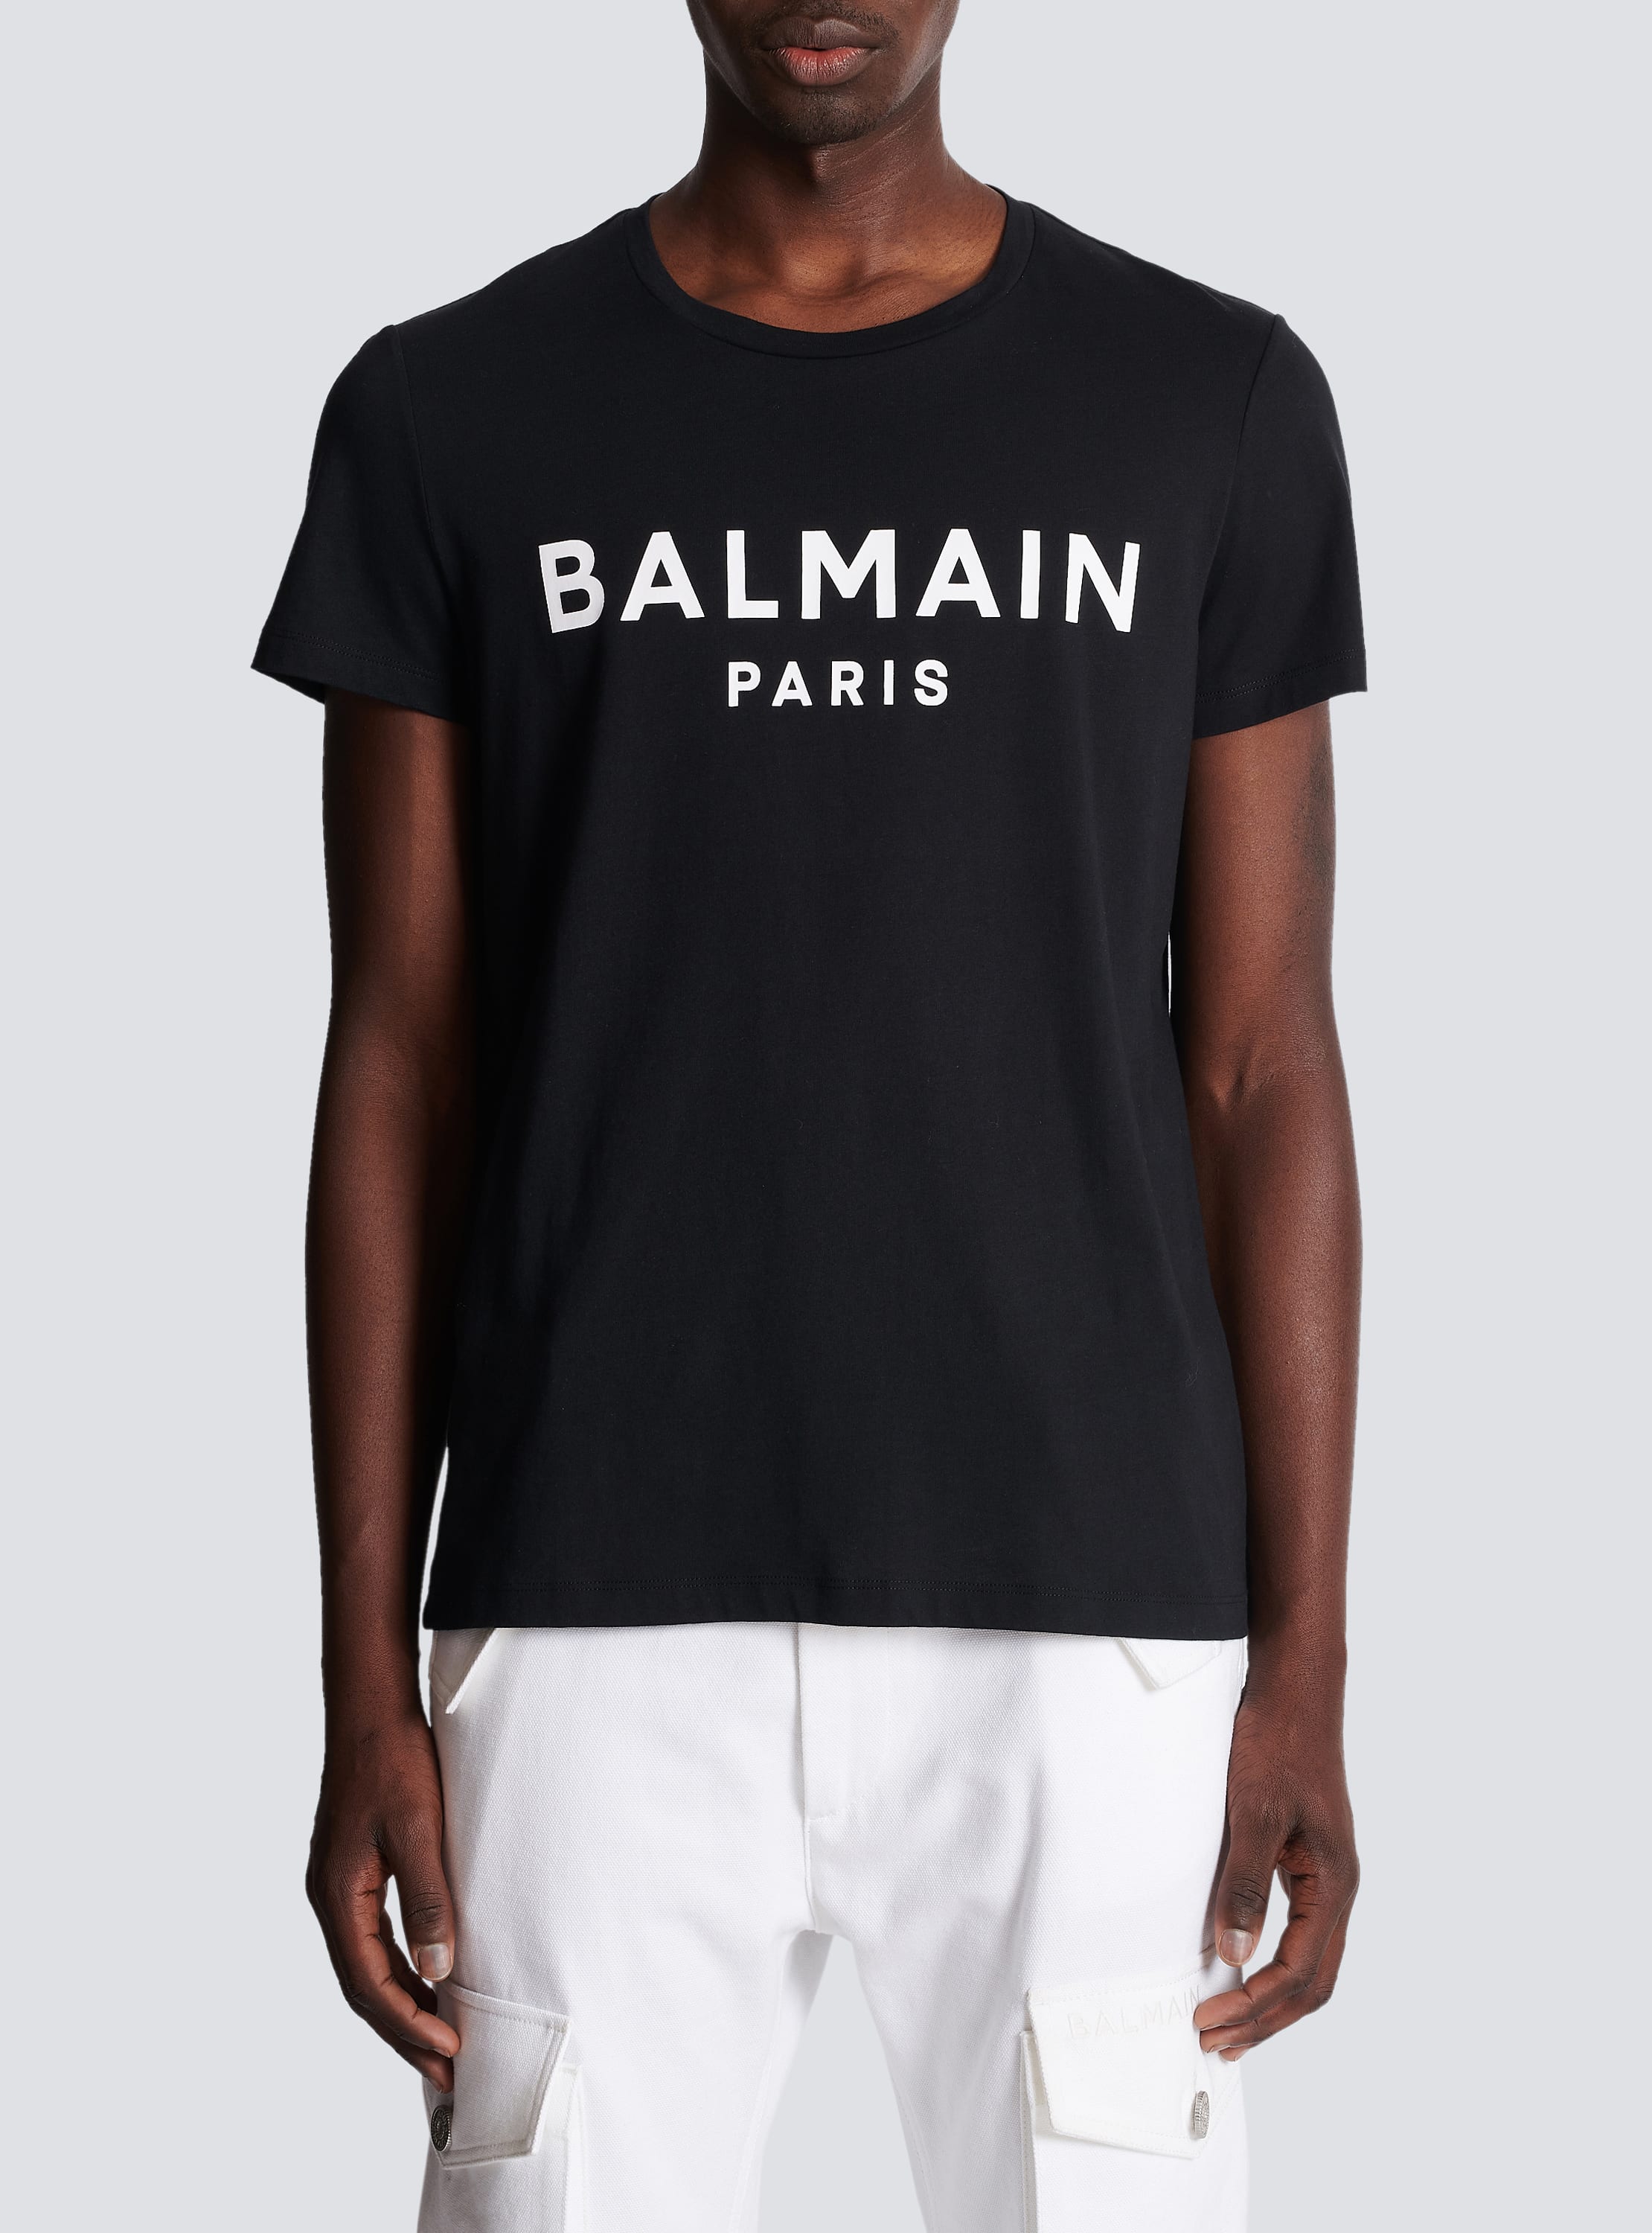 BALMAINバルマン品番新品未使用 ◆BALMAIN◆ブラックコットン Tシャツ M